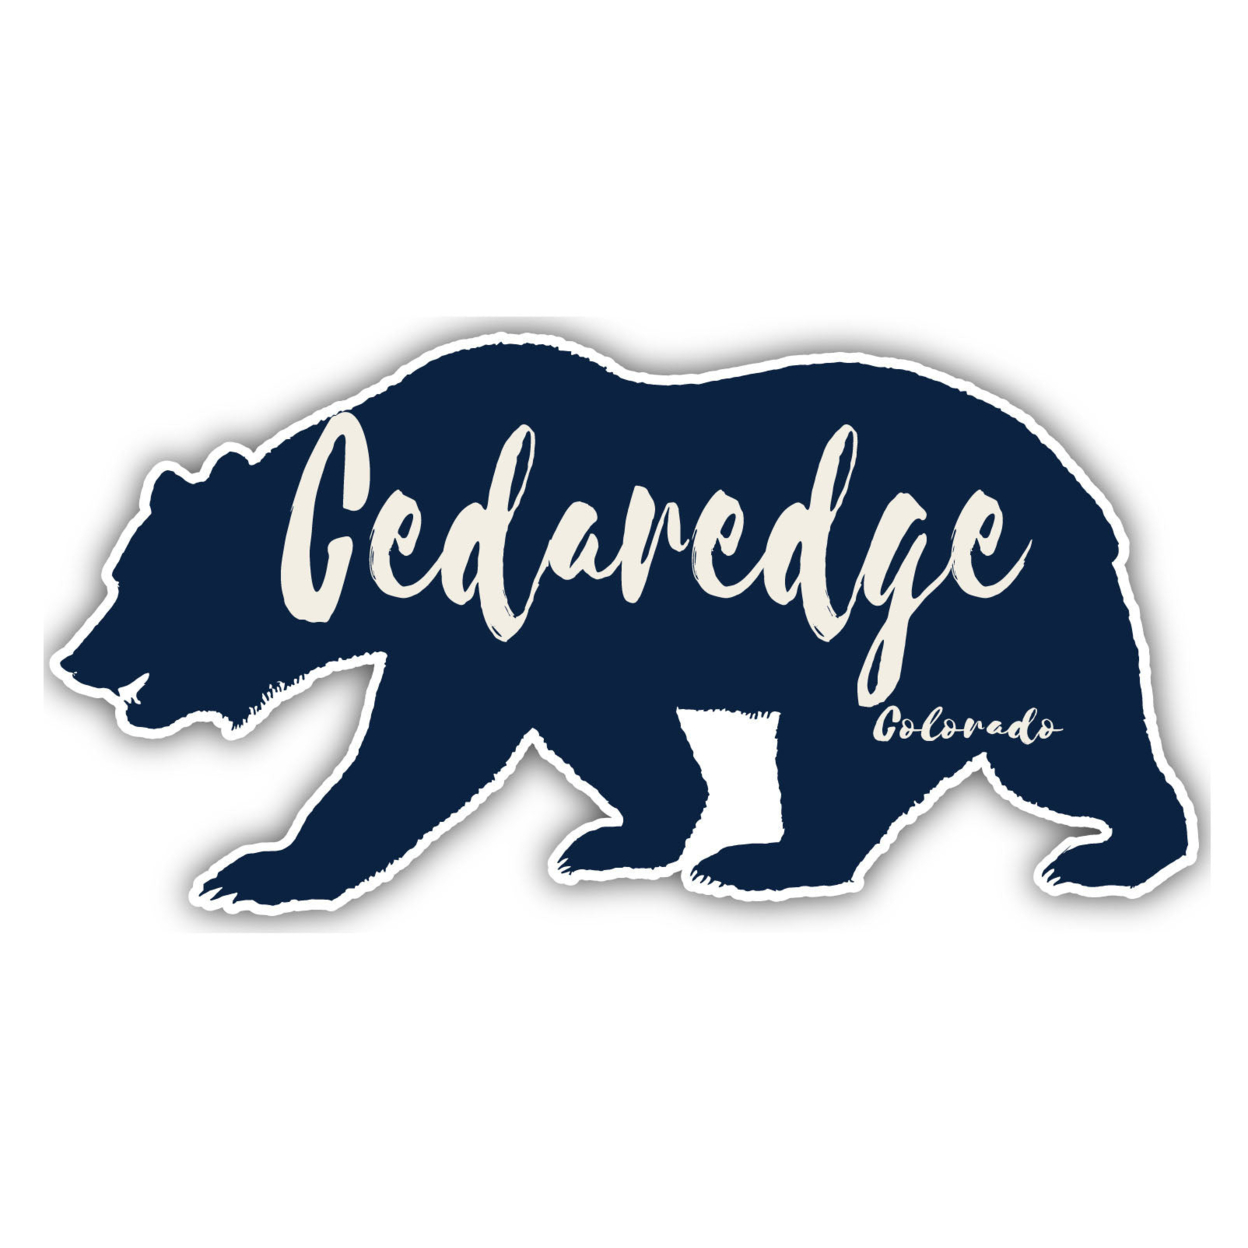 Cedaredge Colorado Souvenir Decorative Stickers (Choose Theme And Size) - 4-Pack, 6-Inch, Bear